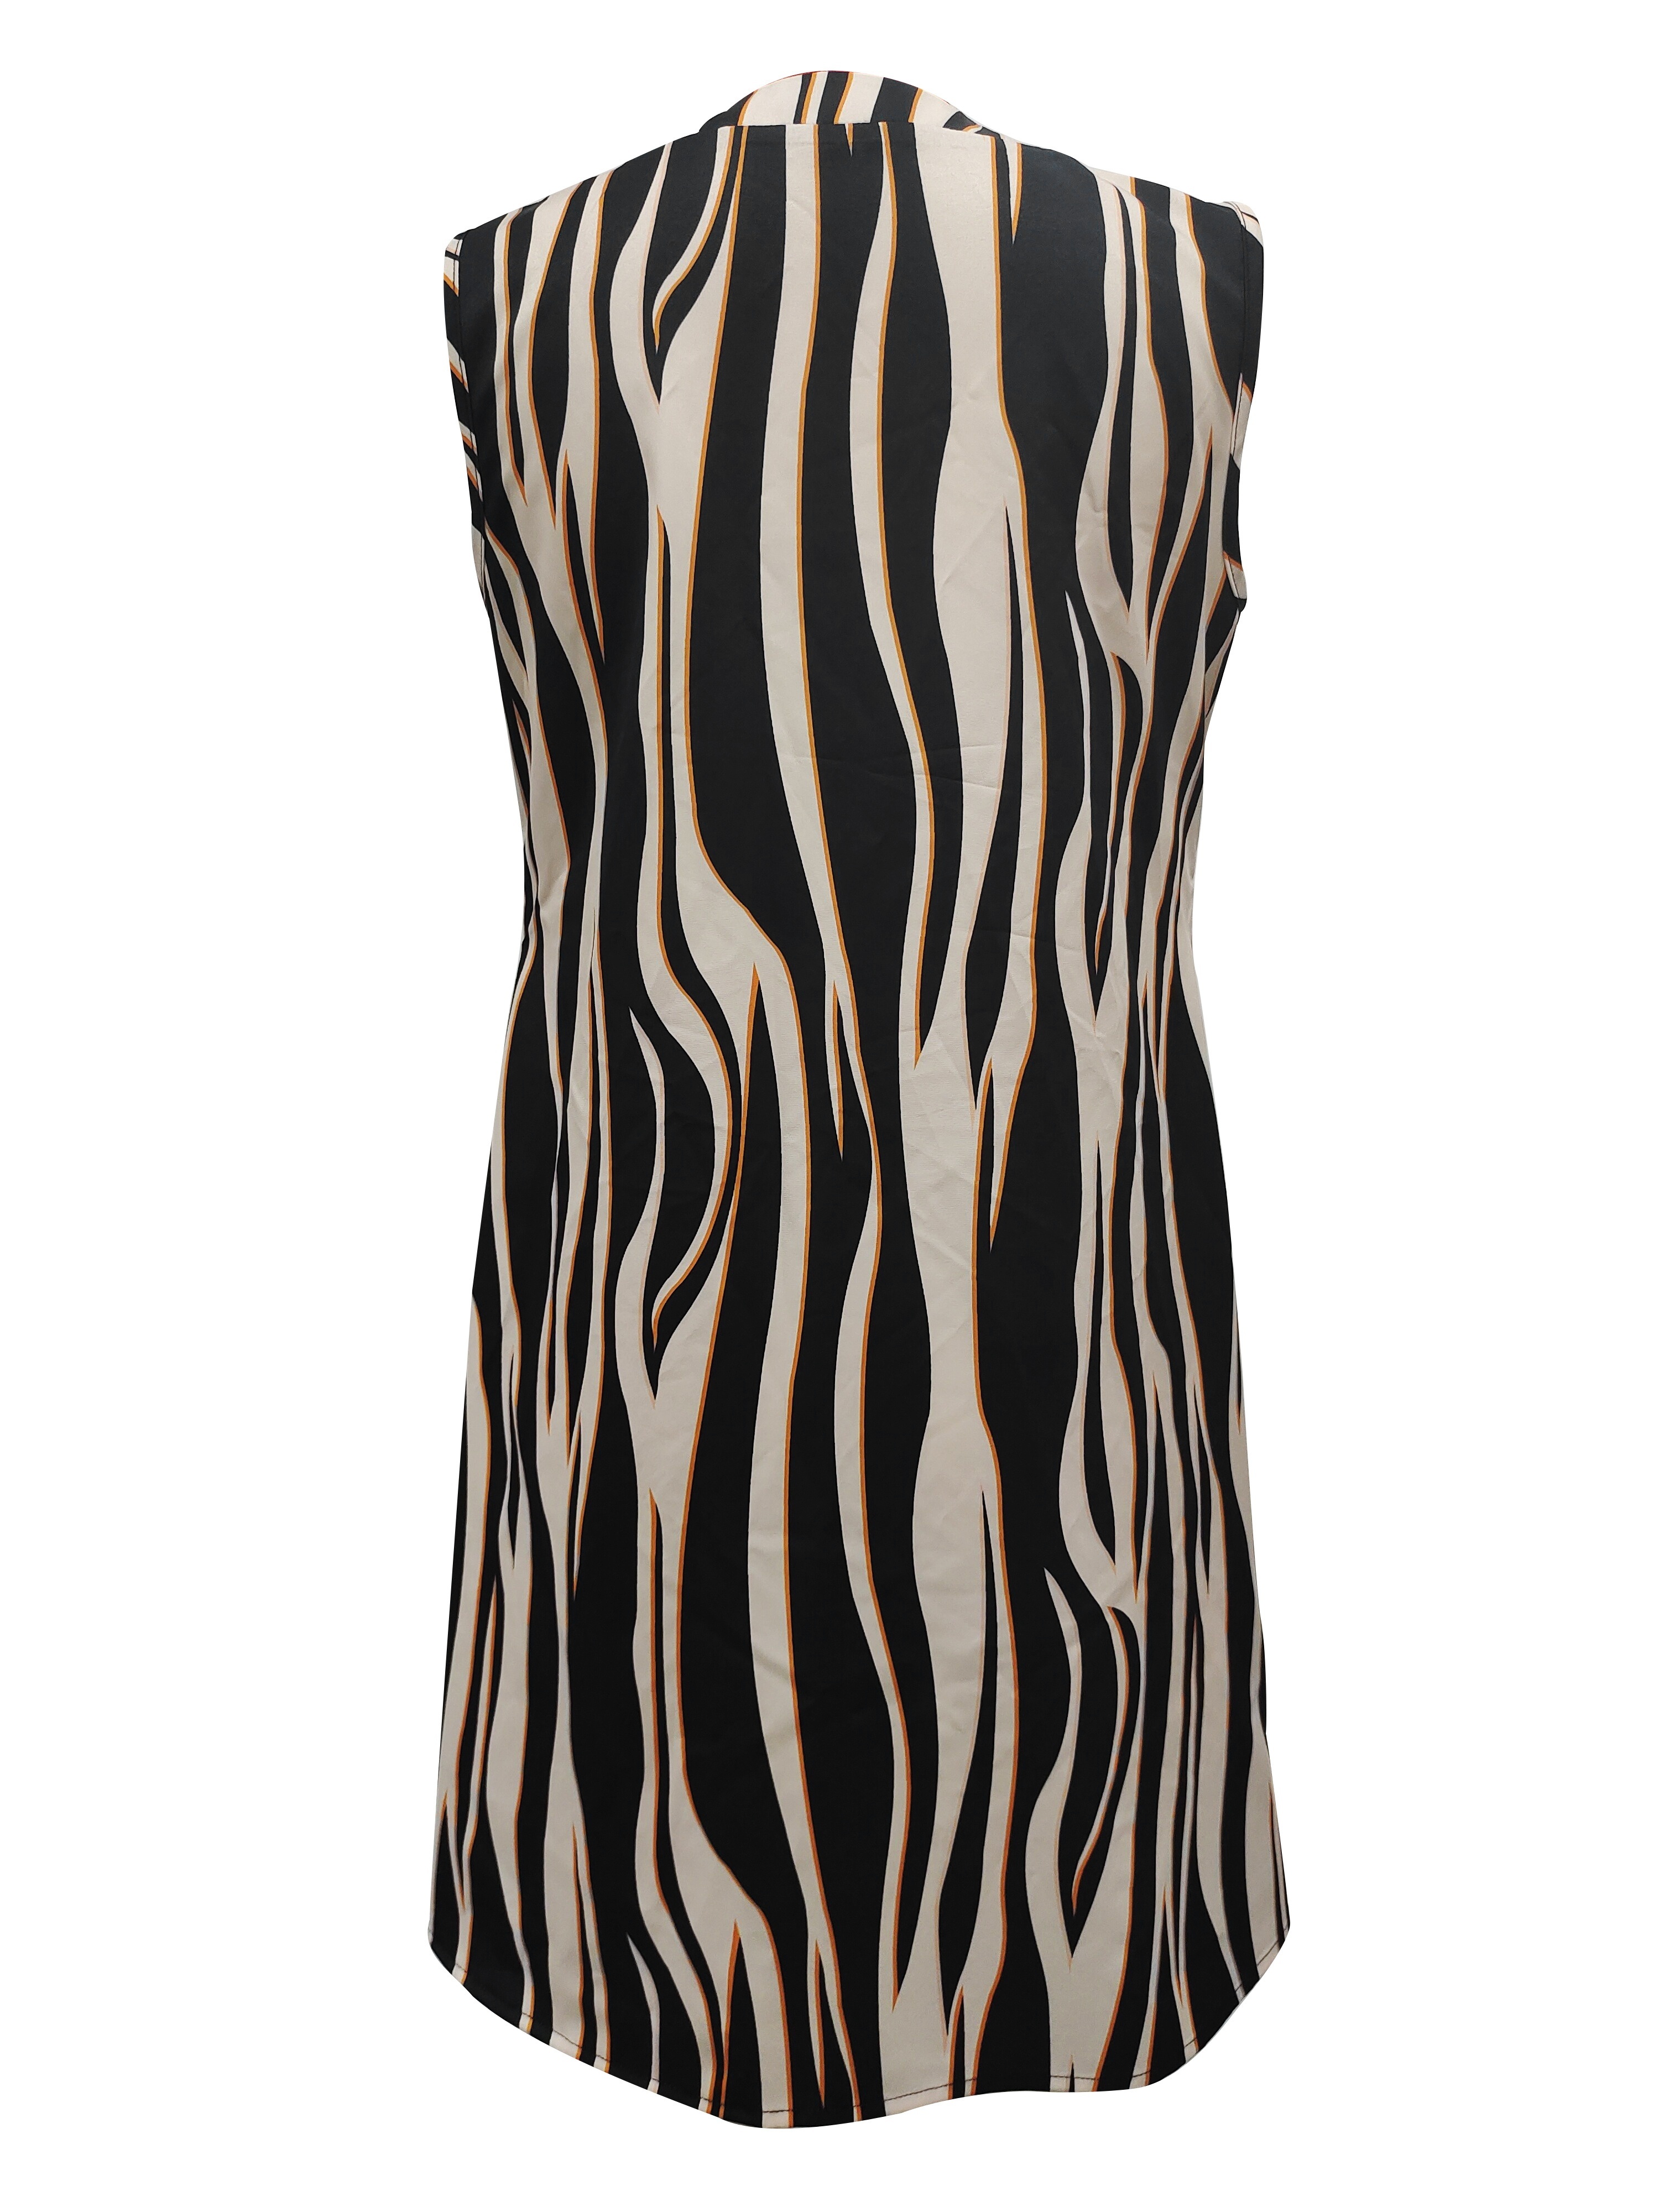 abstract ripple print dress casual v neck sleeveless dress womens clothing details 36